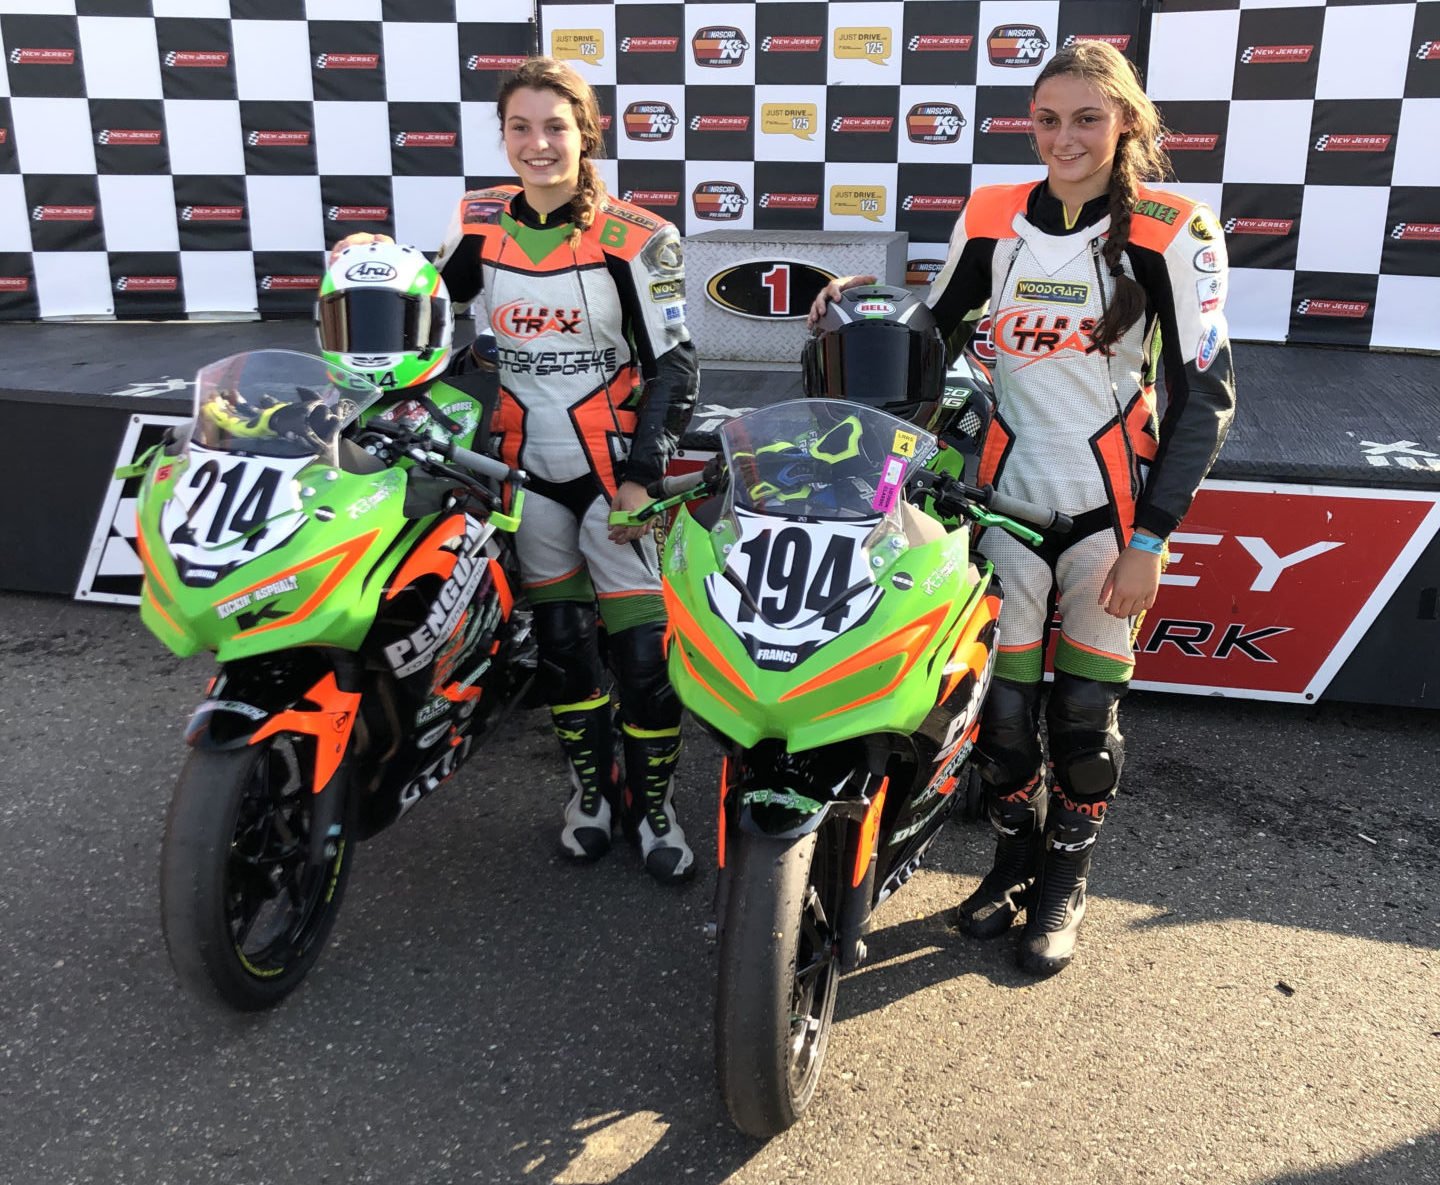 MotoGirlGT 500 Superbike race winners Brianna McHugh (left) and Renee Franco (right). Photo courtesy MotoGirlGT.